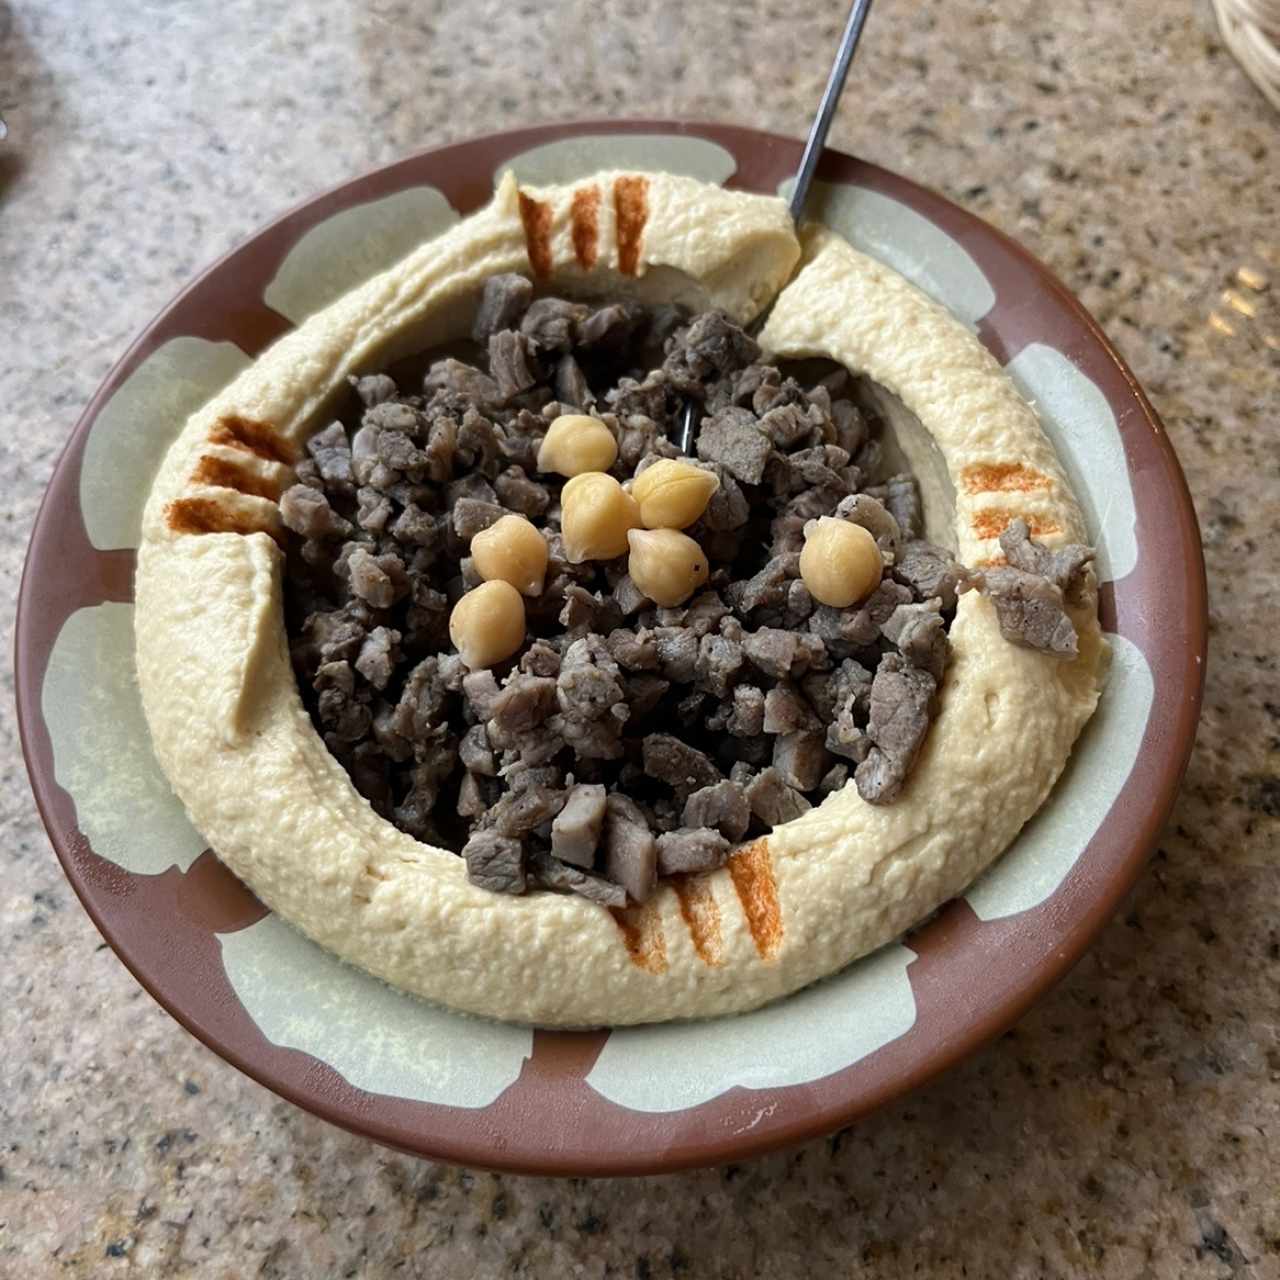 Entradas Libanesas - Hummus Maa Blahme